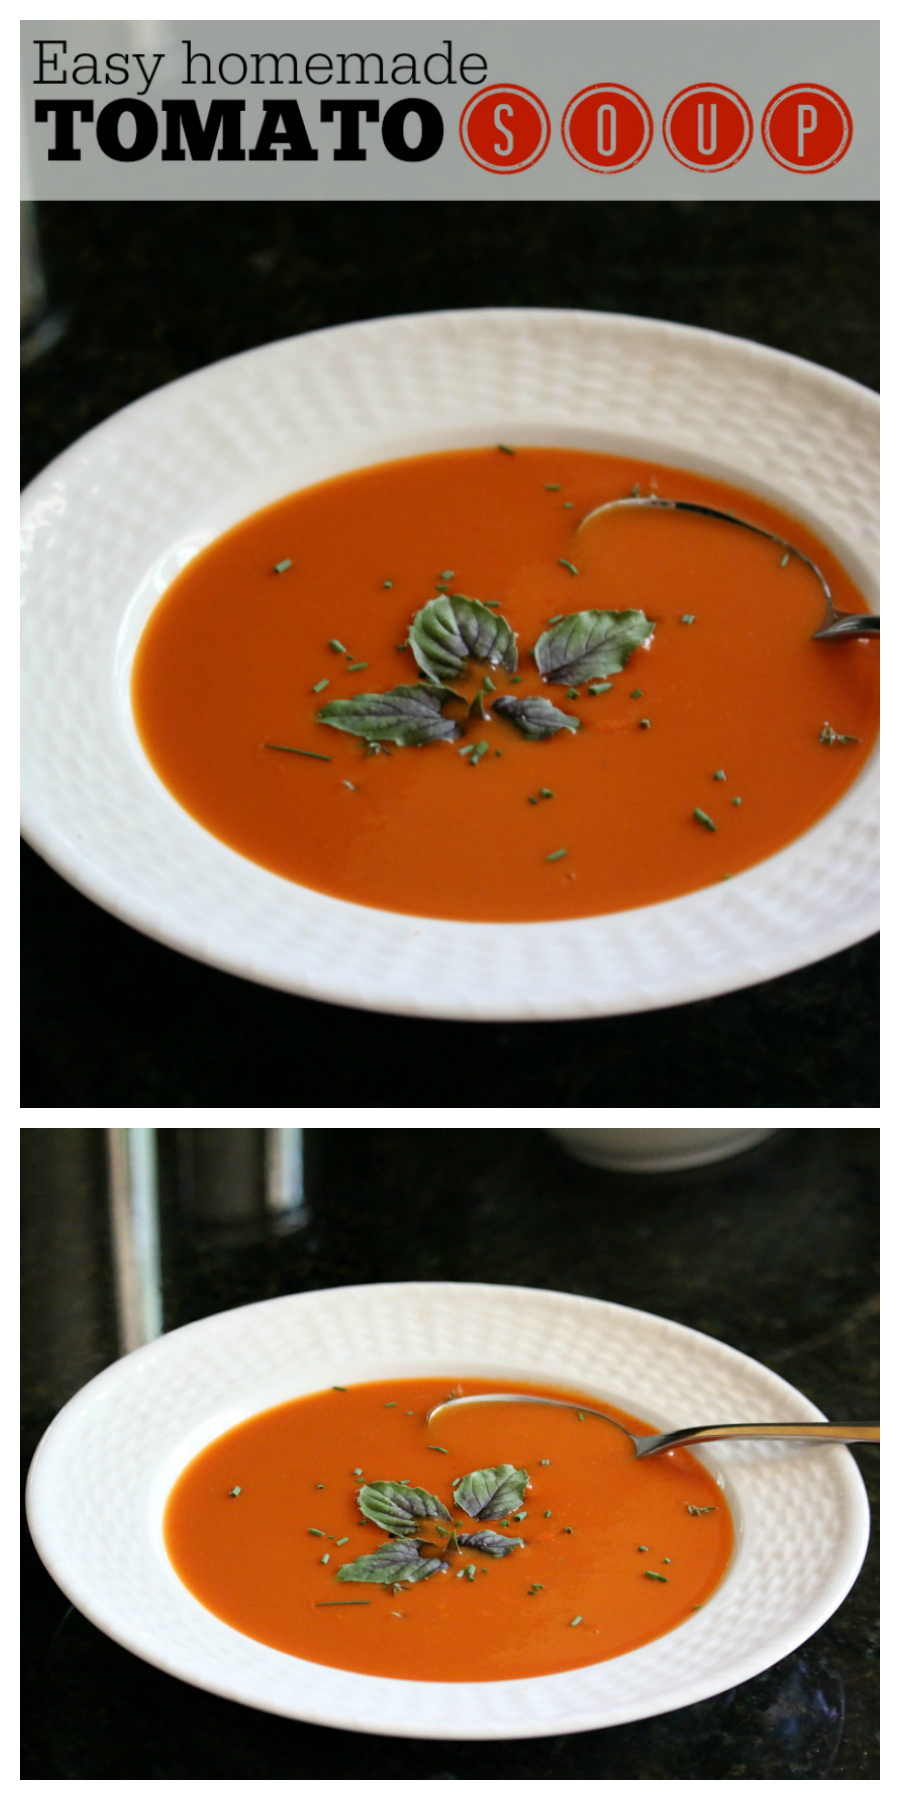 Easy Homemade Tomato Soup CeceliasGoodStuff.com Good Foood for Good People